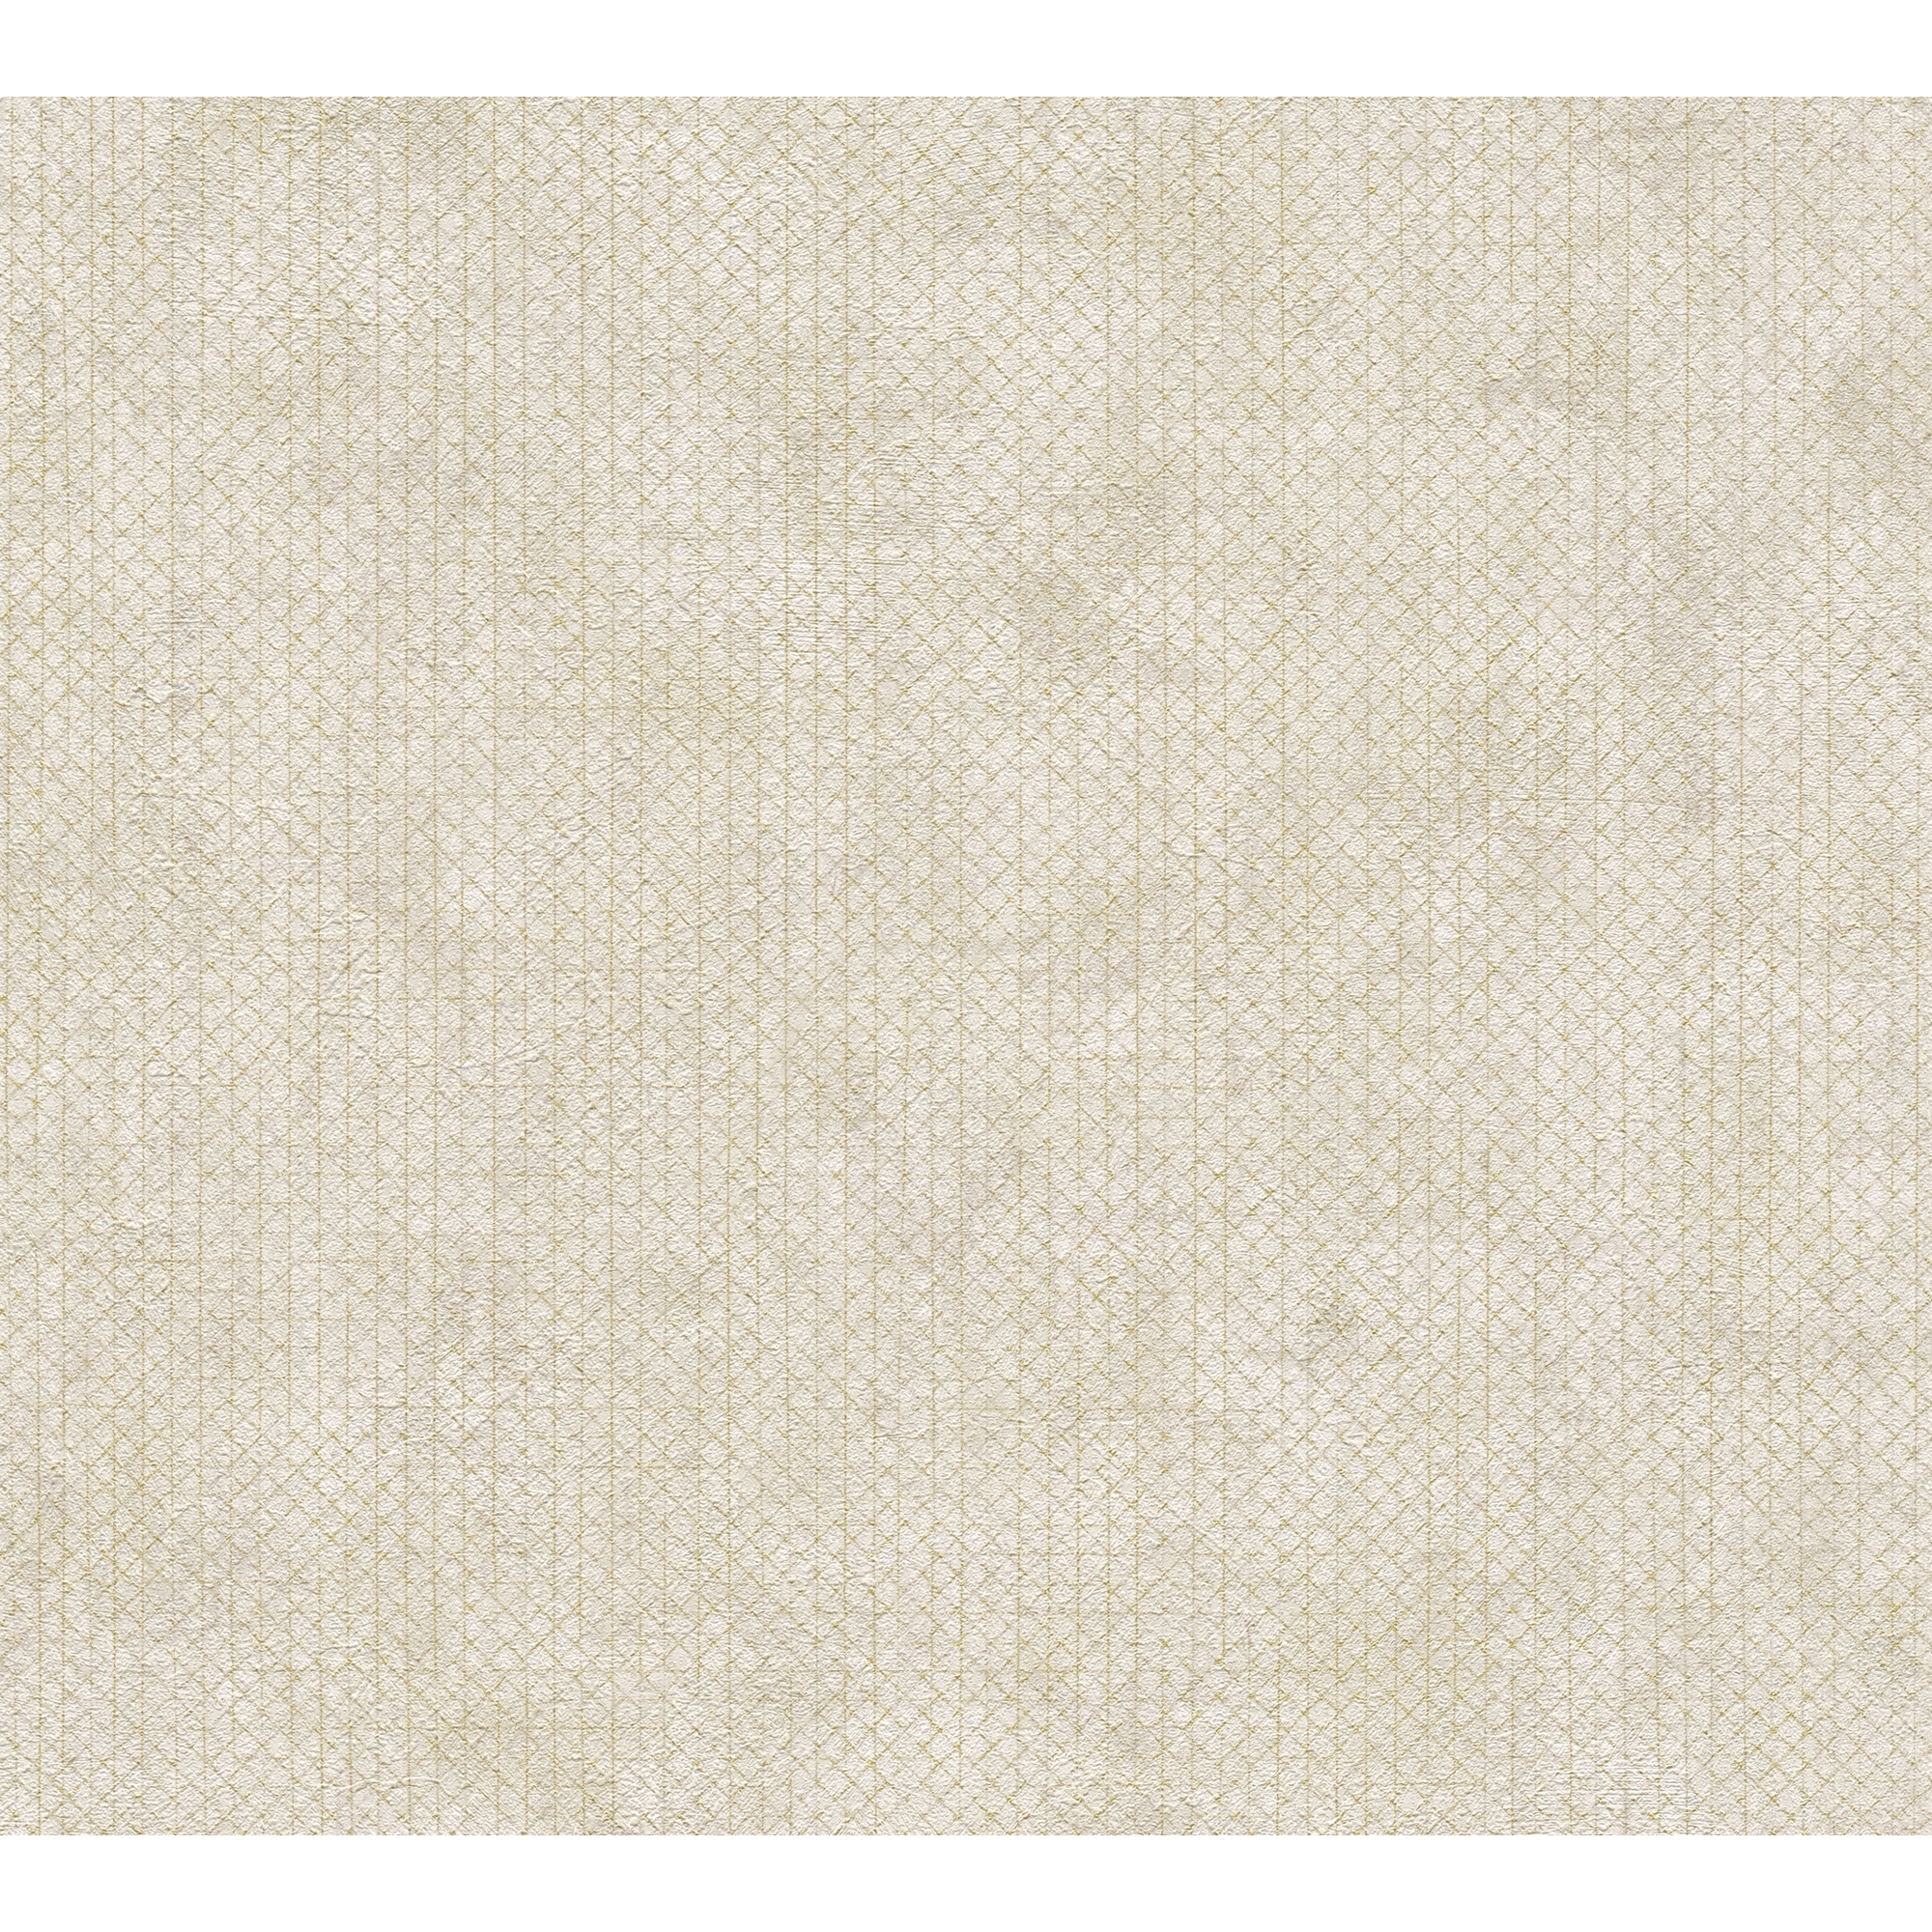 Vliestapete 'The BoS' Rautenmuster Grafik beige/gold 10,05 x 0,53 m + product picture